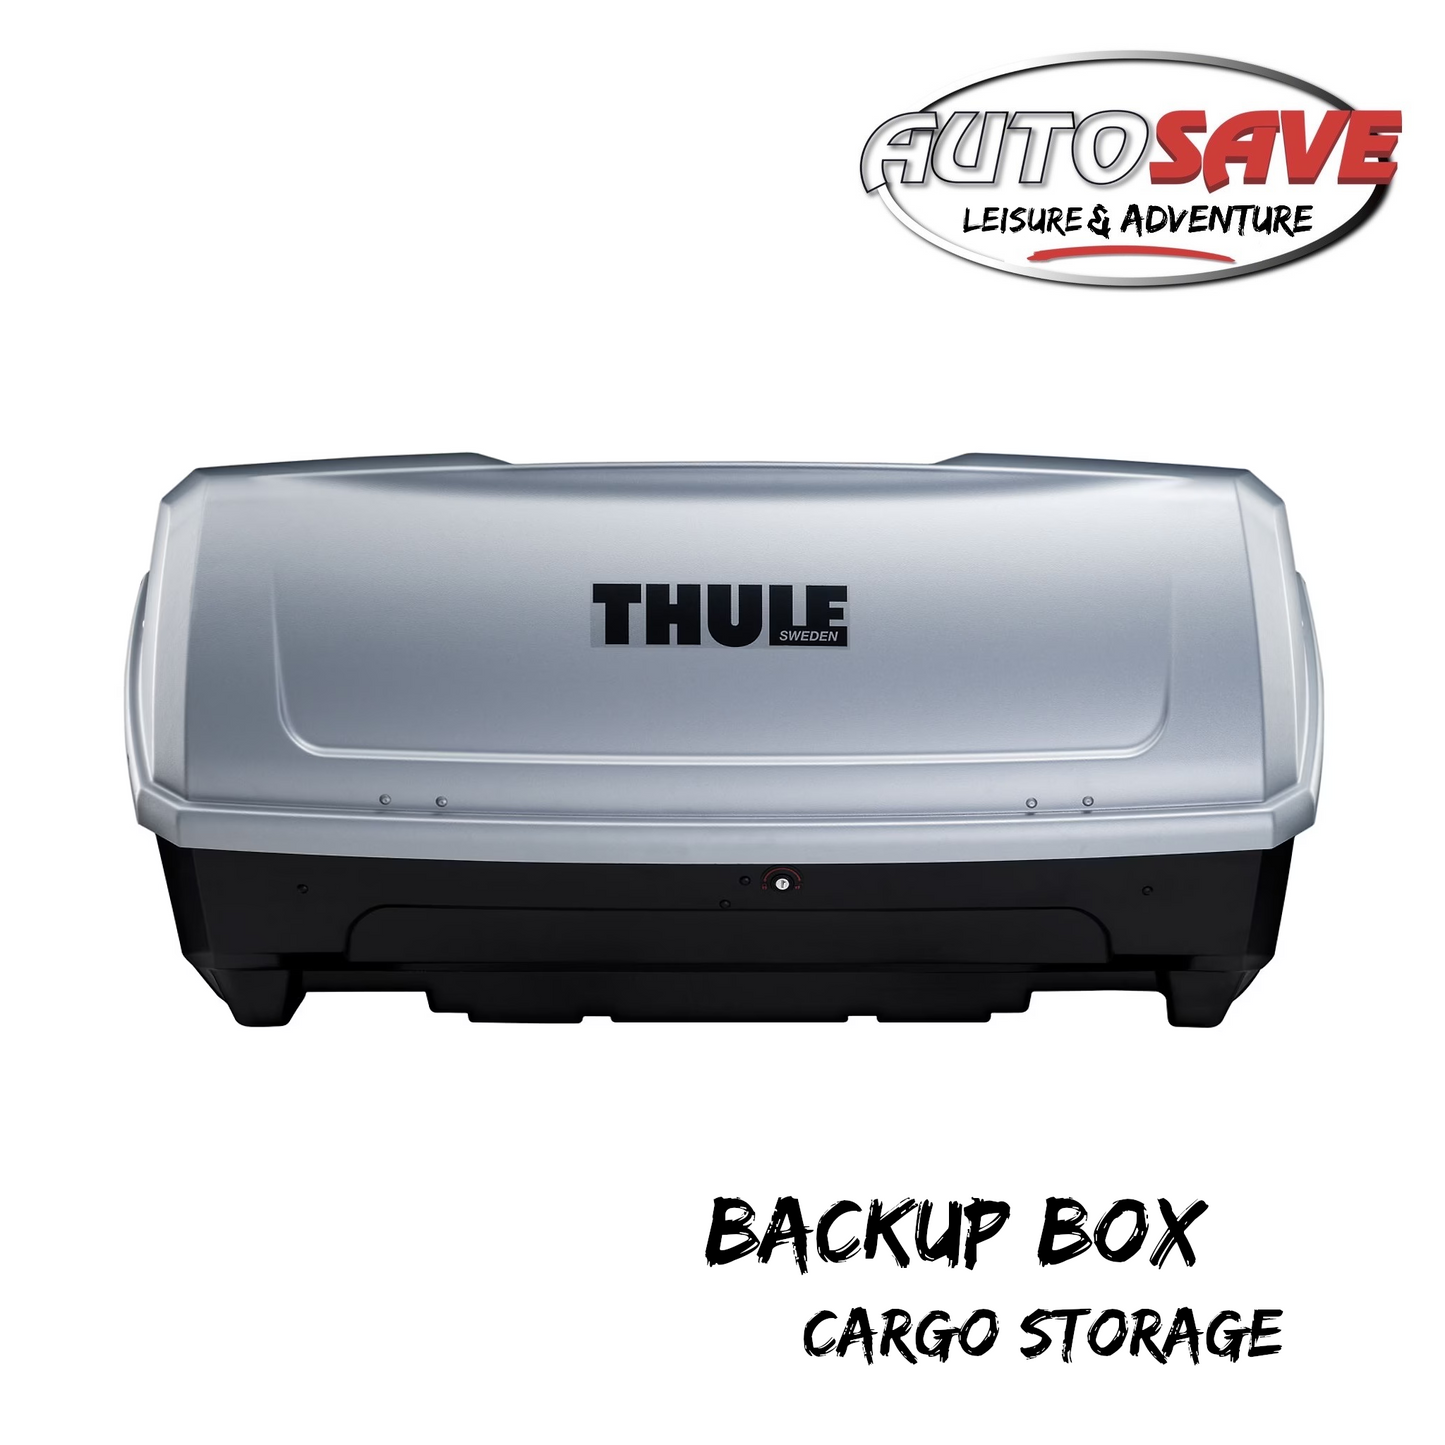 Thule 900 BackUp Box 420l Cargo Storage | Fits 949 EasyBase